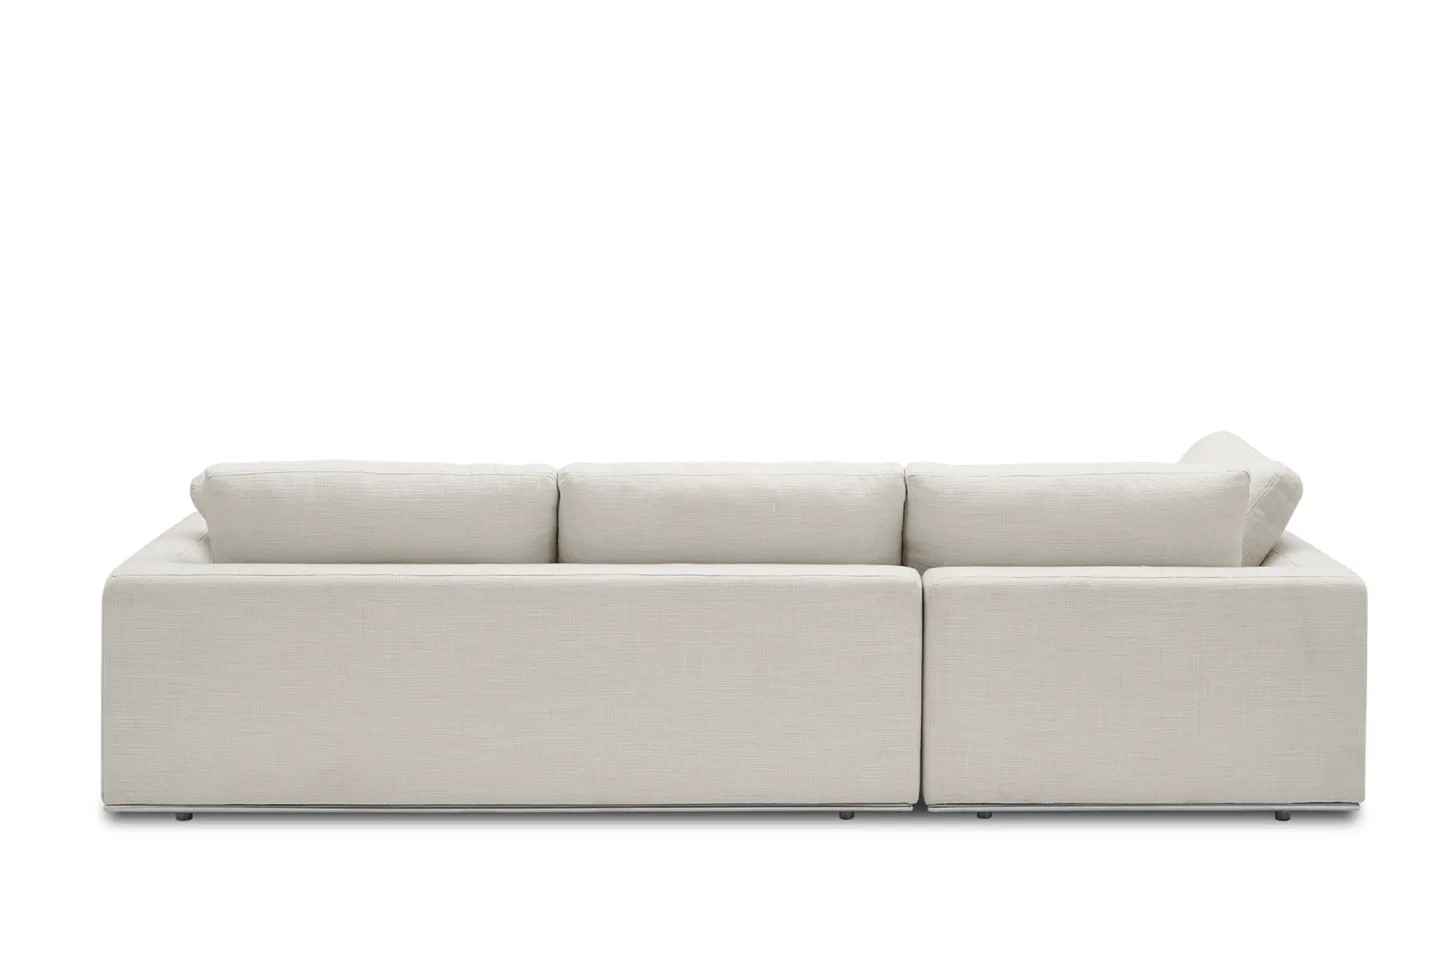 Hamilton Chaise Sectional Sofa